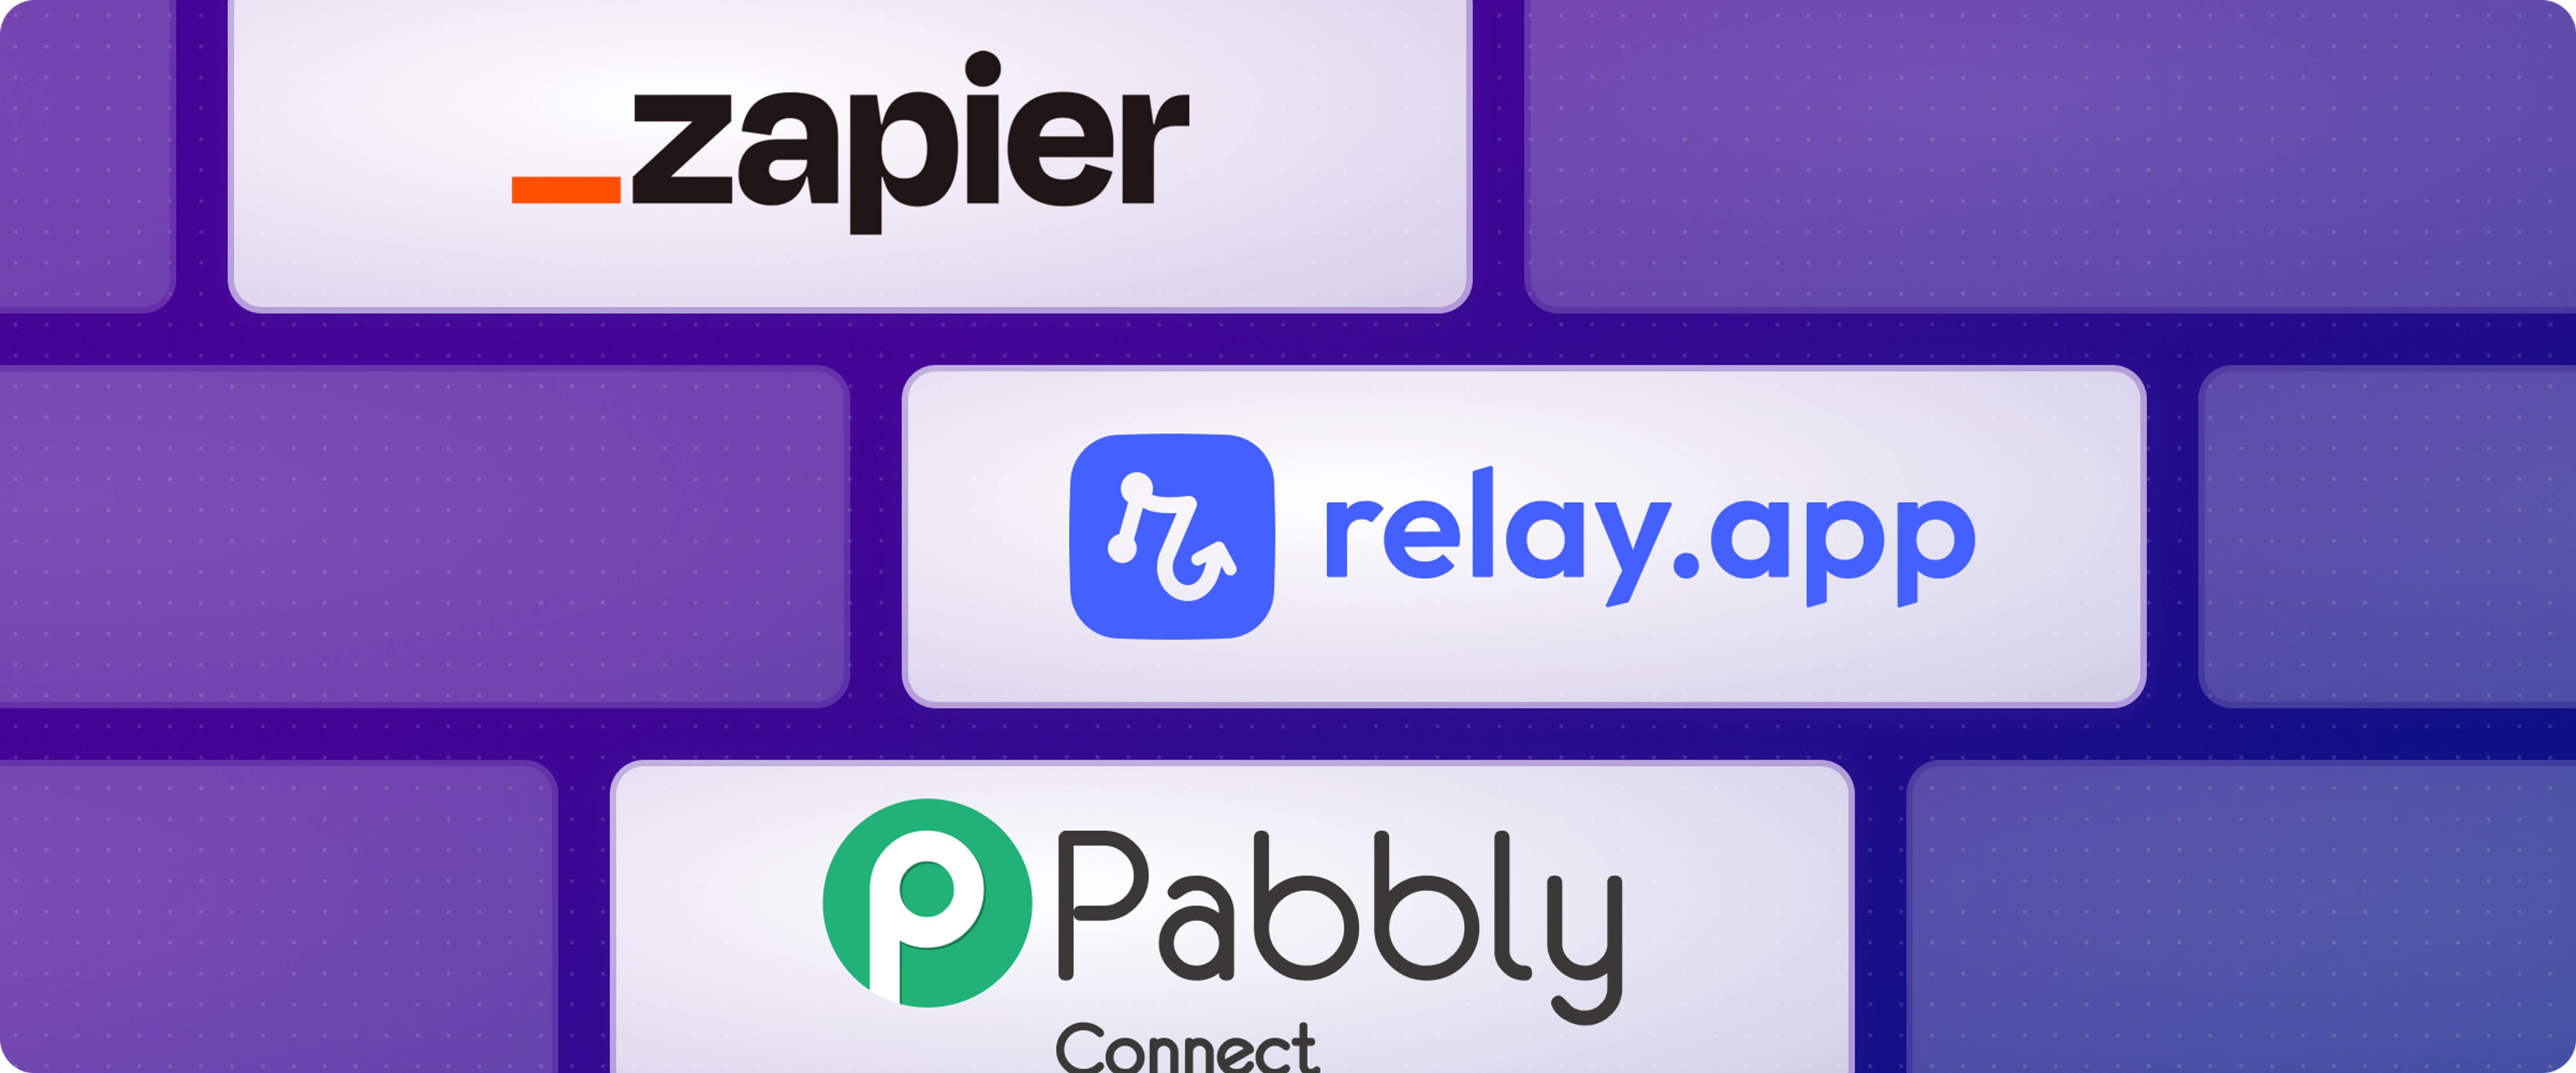 Thumbnail for Pabbly Connect vs Zapier vs Relay.app